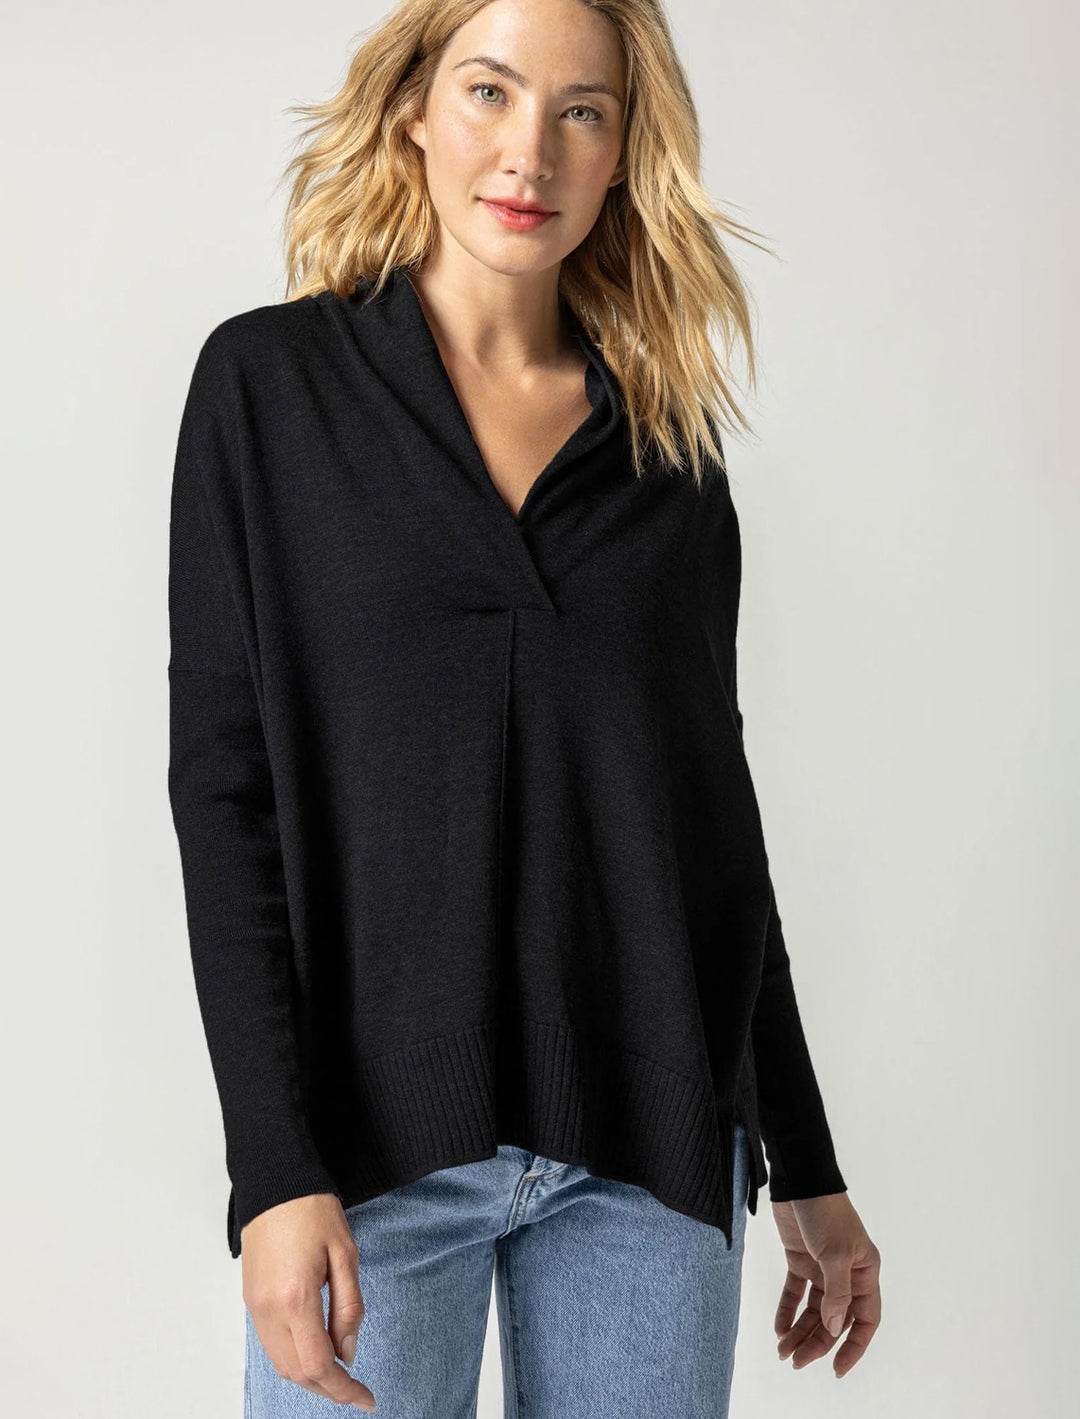 Model wearing Lilla P.'s oversized shawl collar sweater in black.